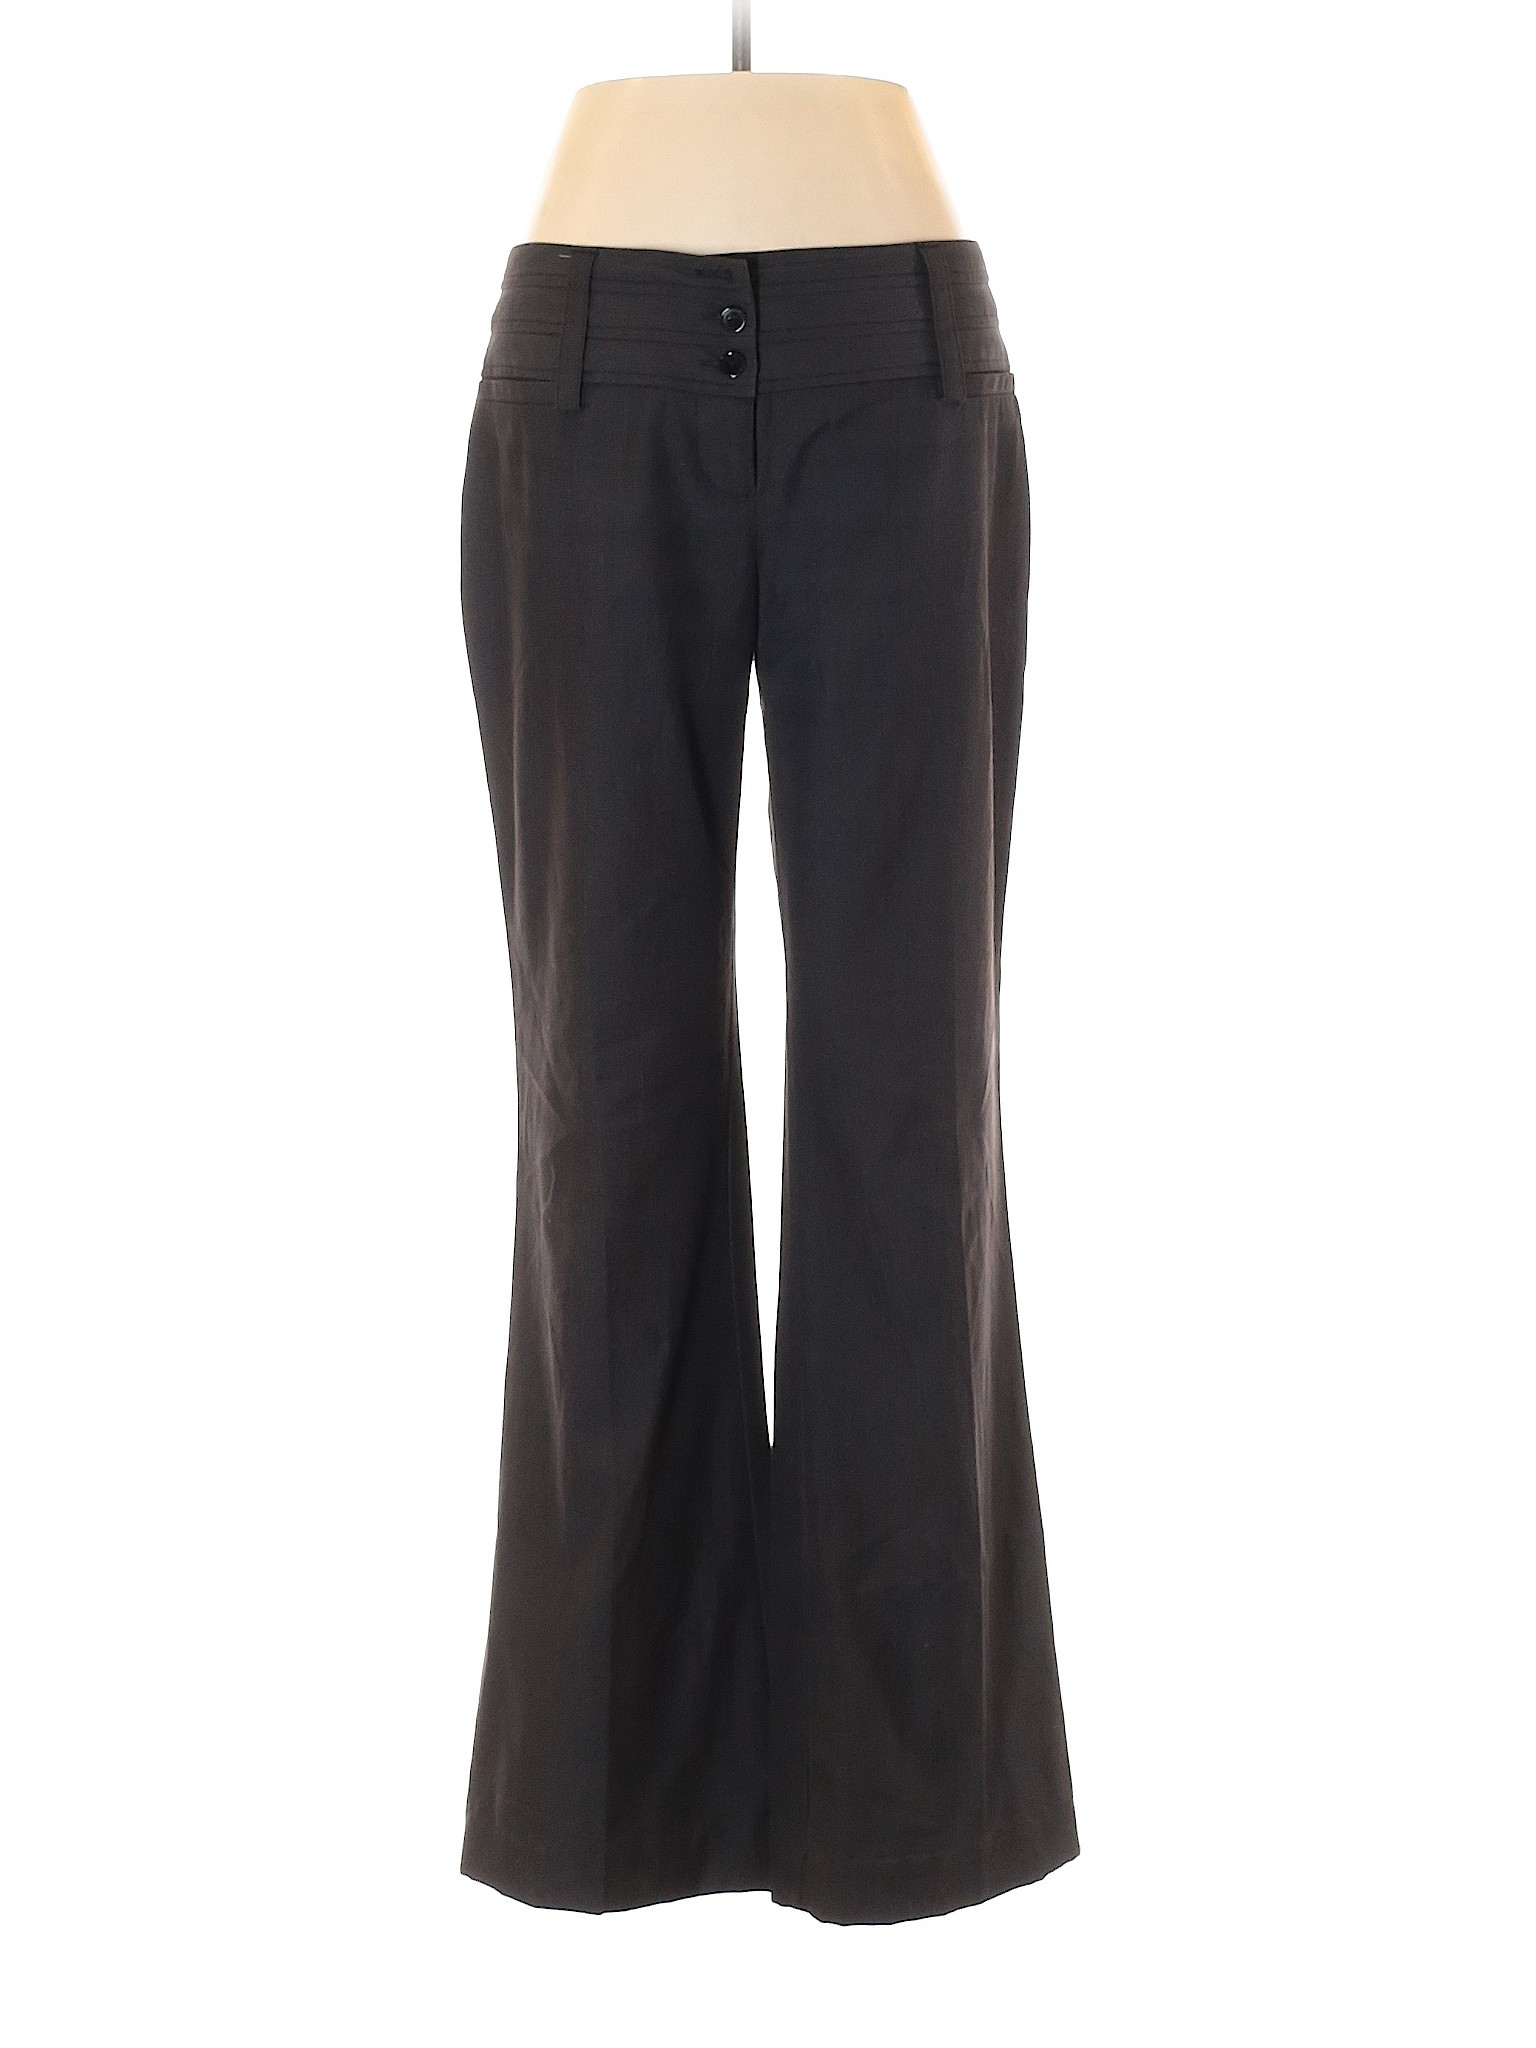 Iz Byer Women Black Dress Pants 7 | eBay